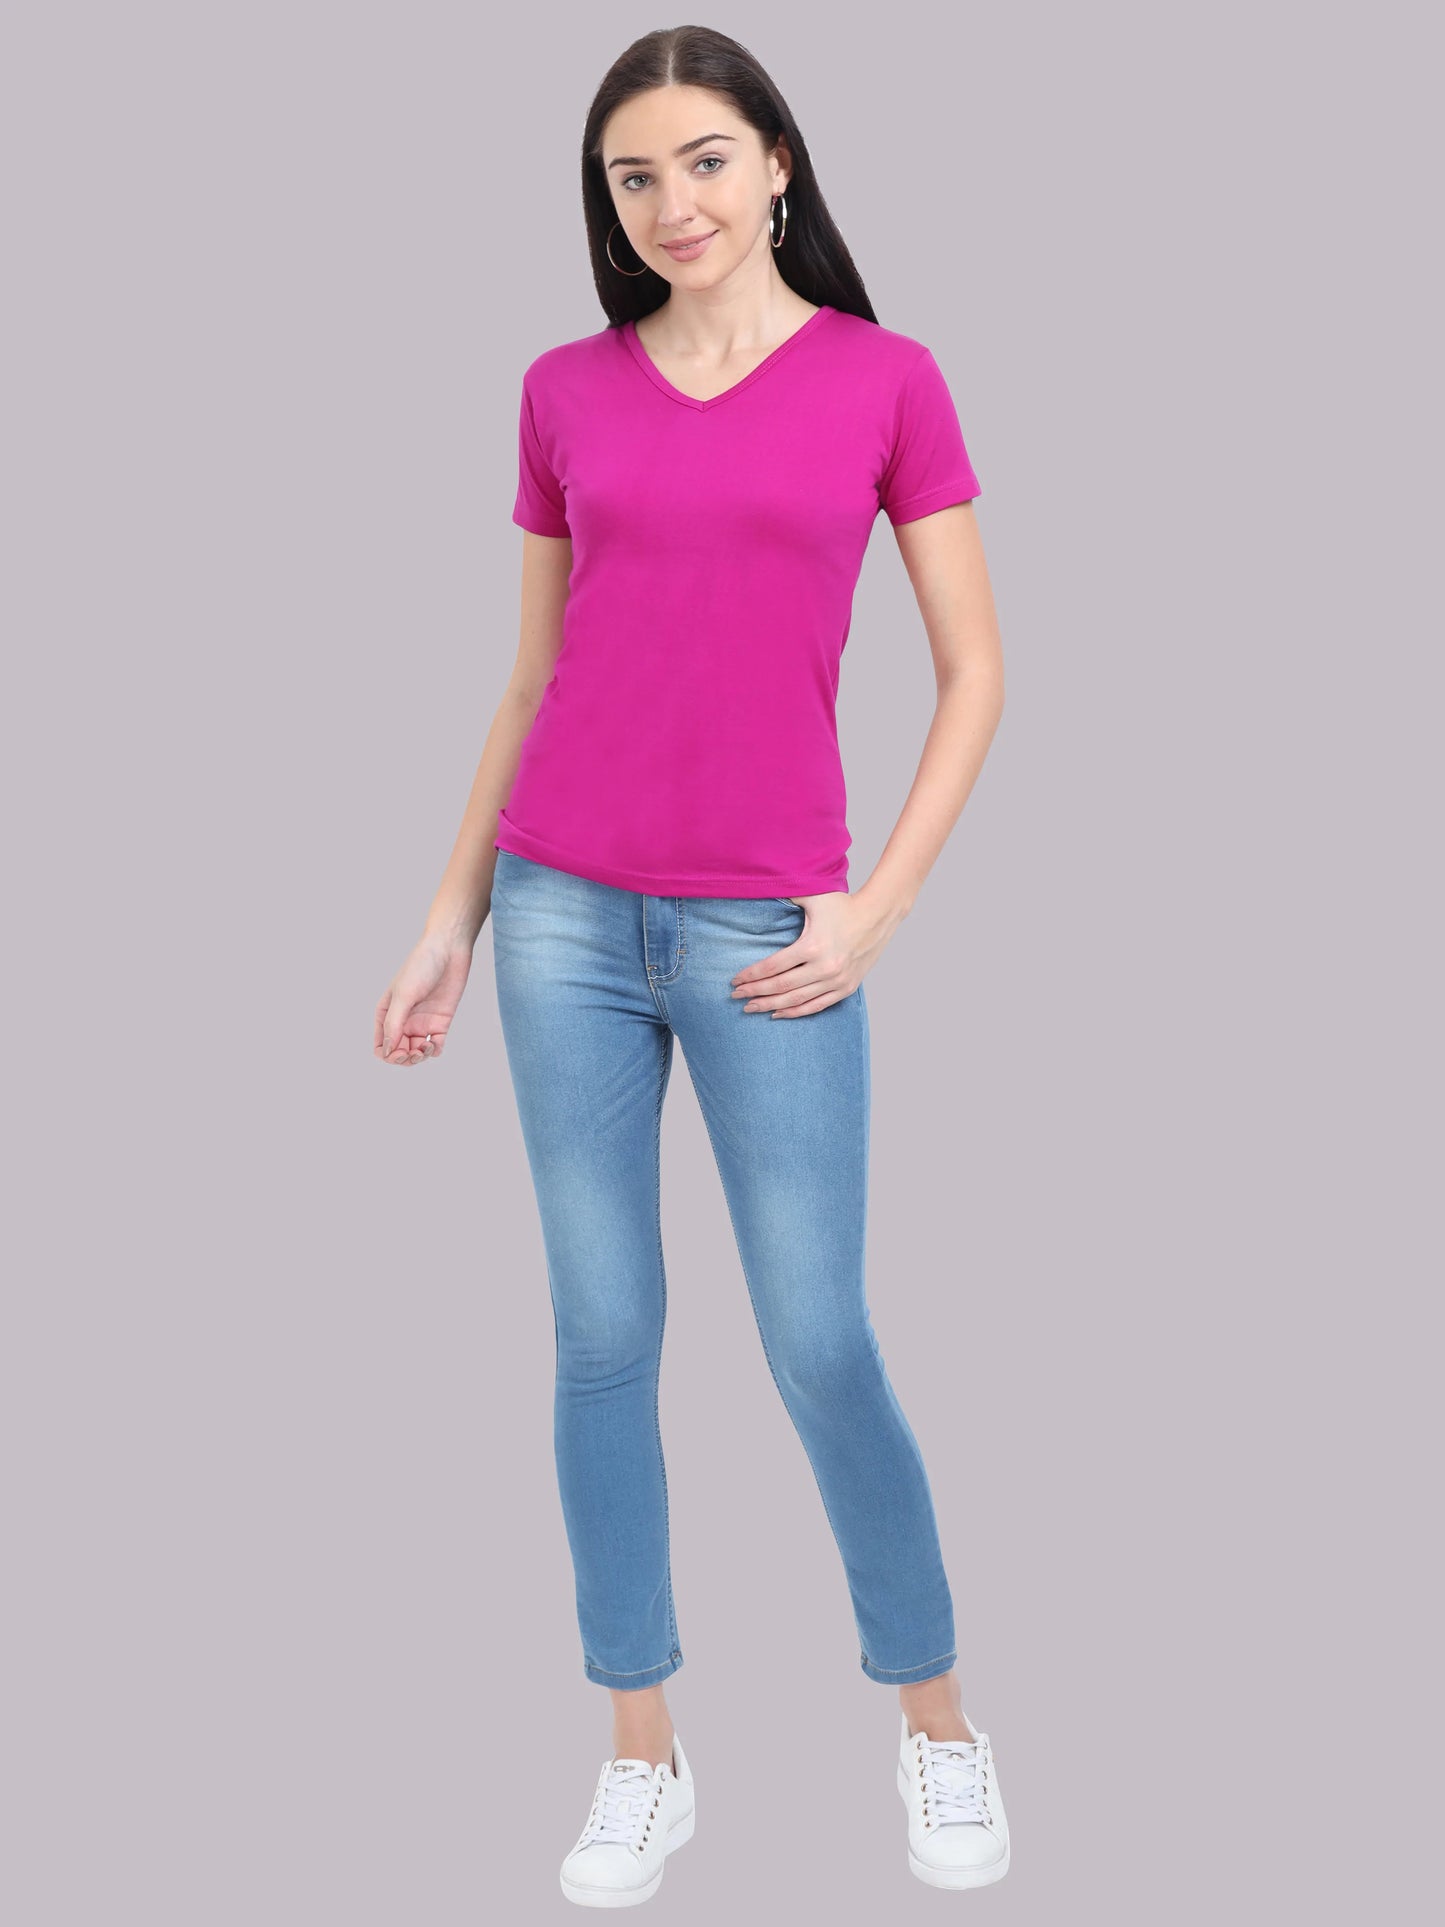 Women's Cotton Plain V Neck Half Sleeve Magenta Color T-Shirt